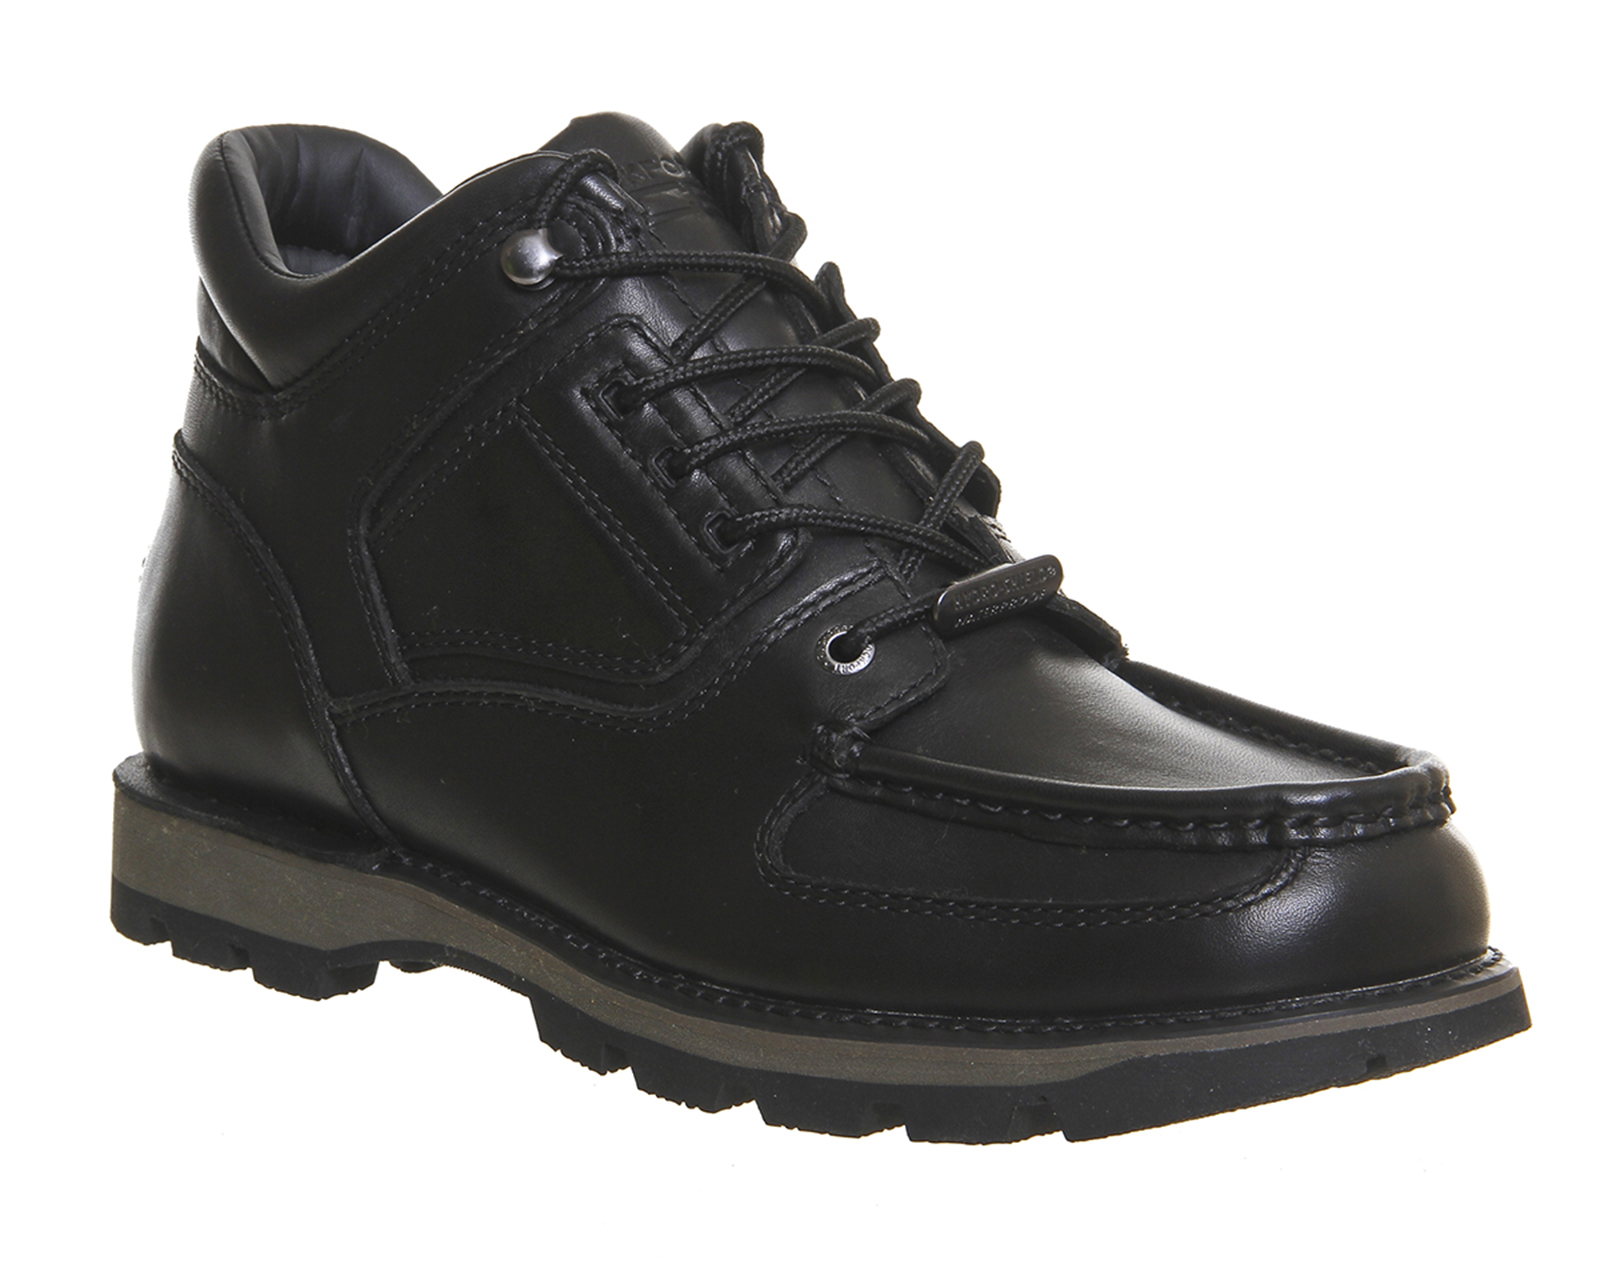 Rockport Umbwe Boots Black Leather - Boots